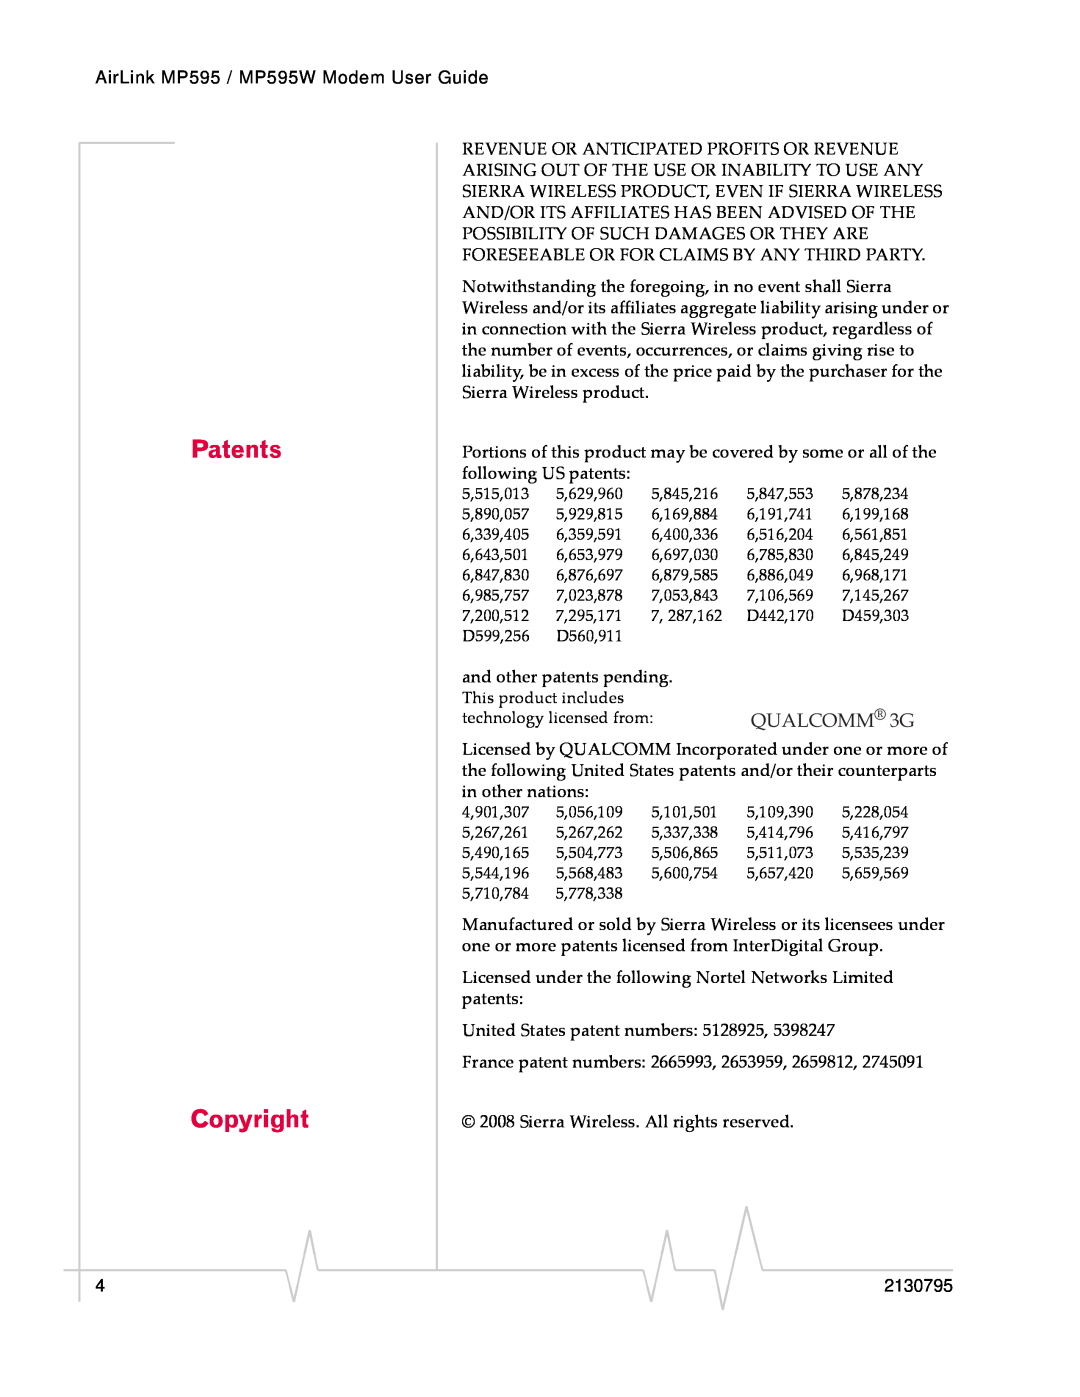 Sierra Wireless MP595W manual Patents Copyright, QUALCOMM 3G 